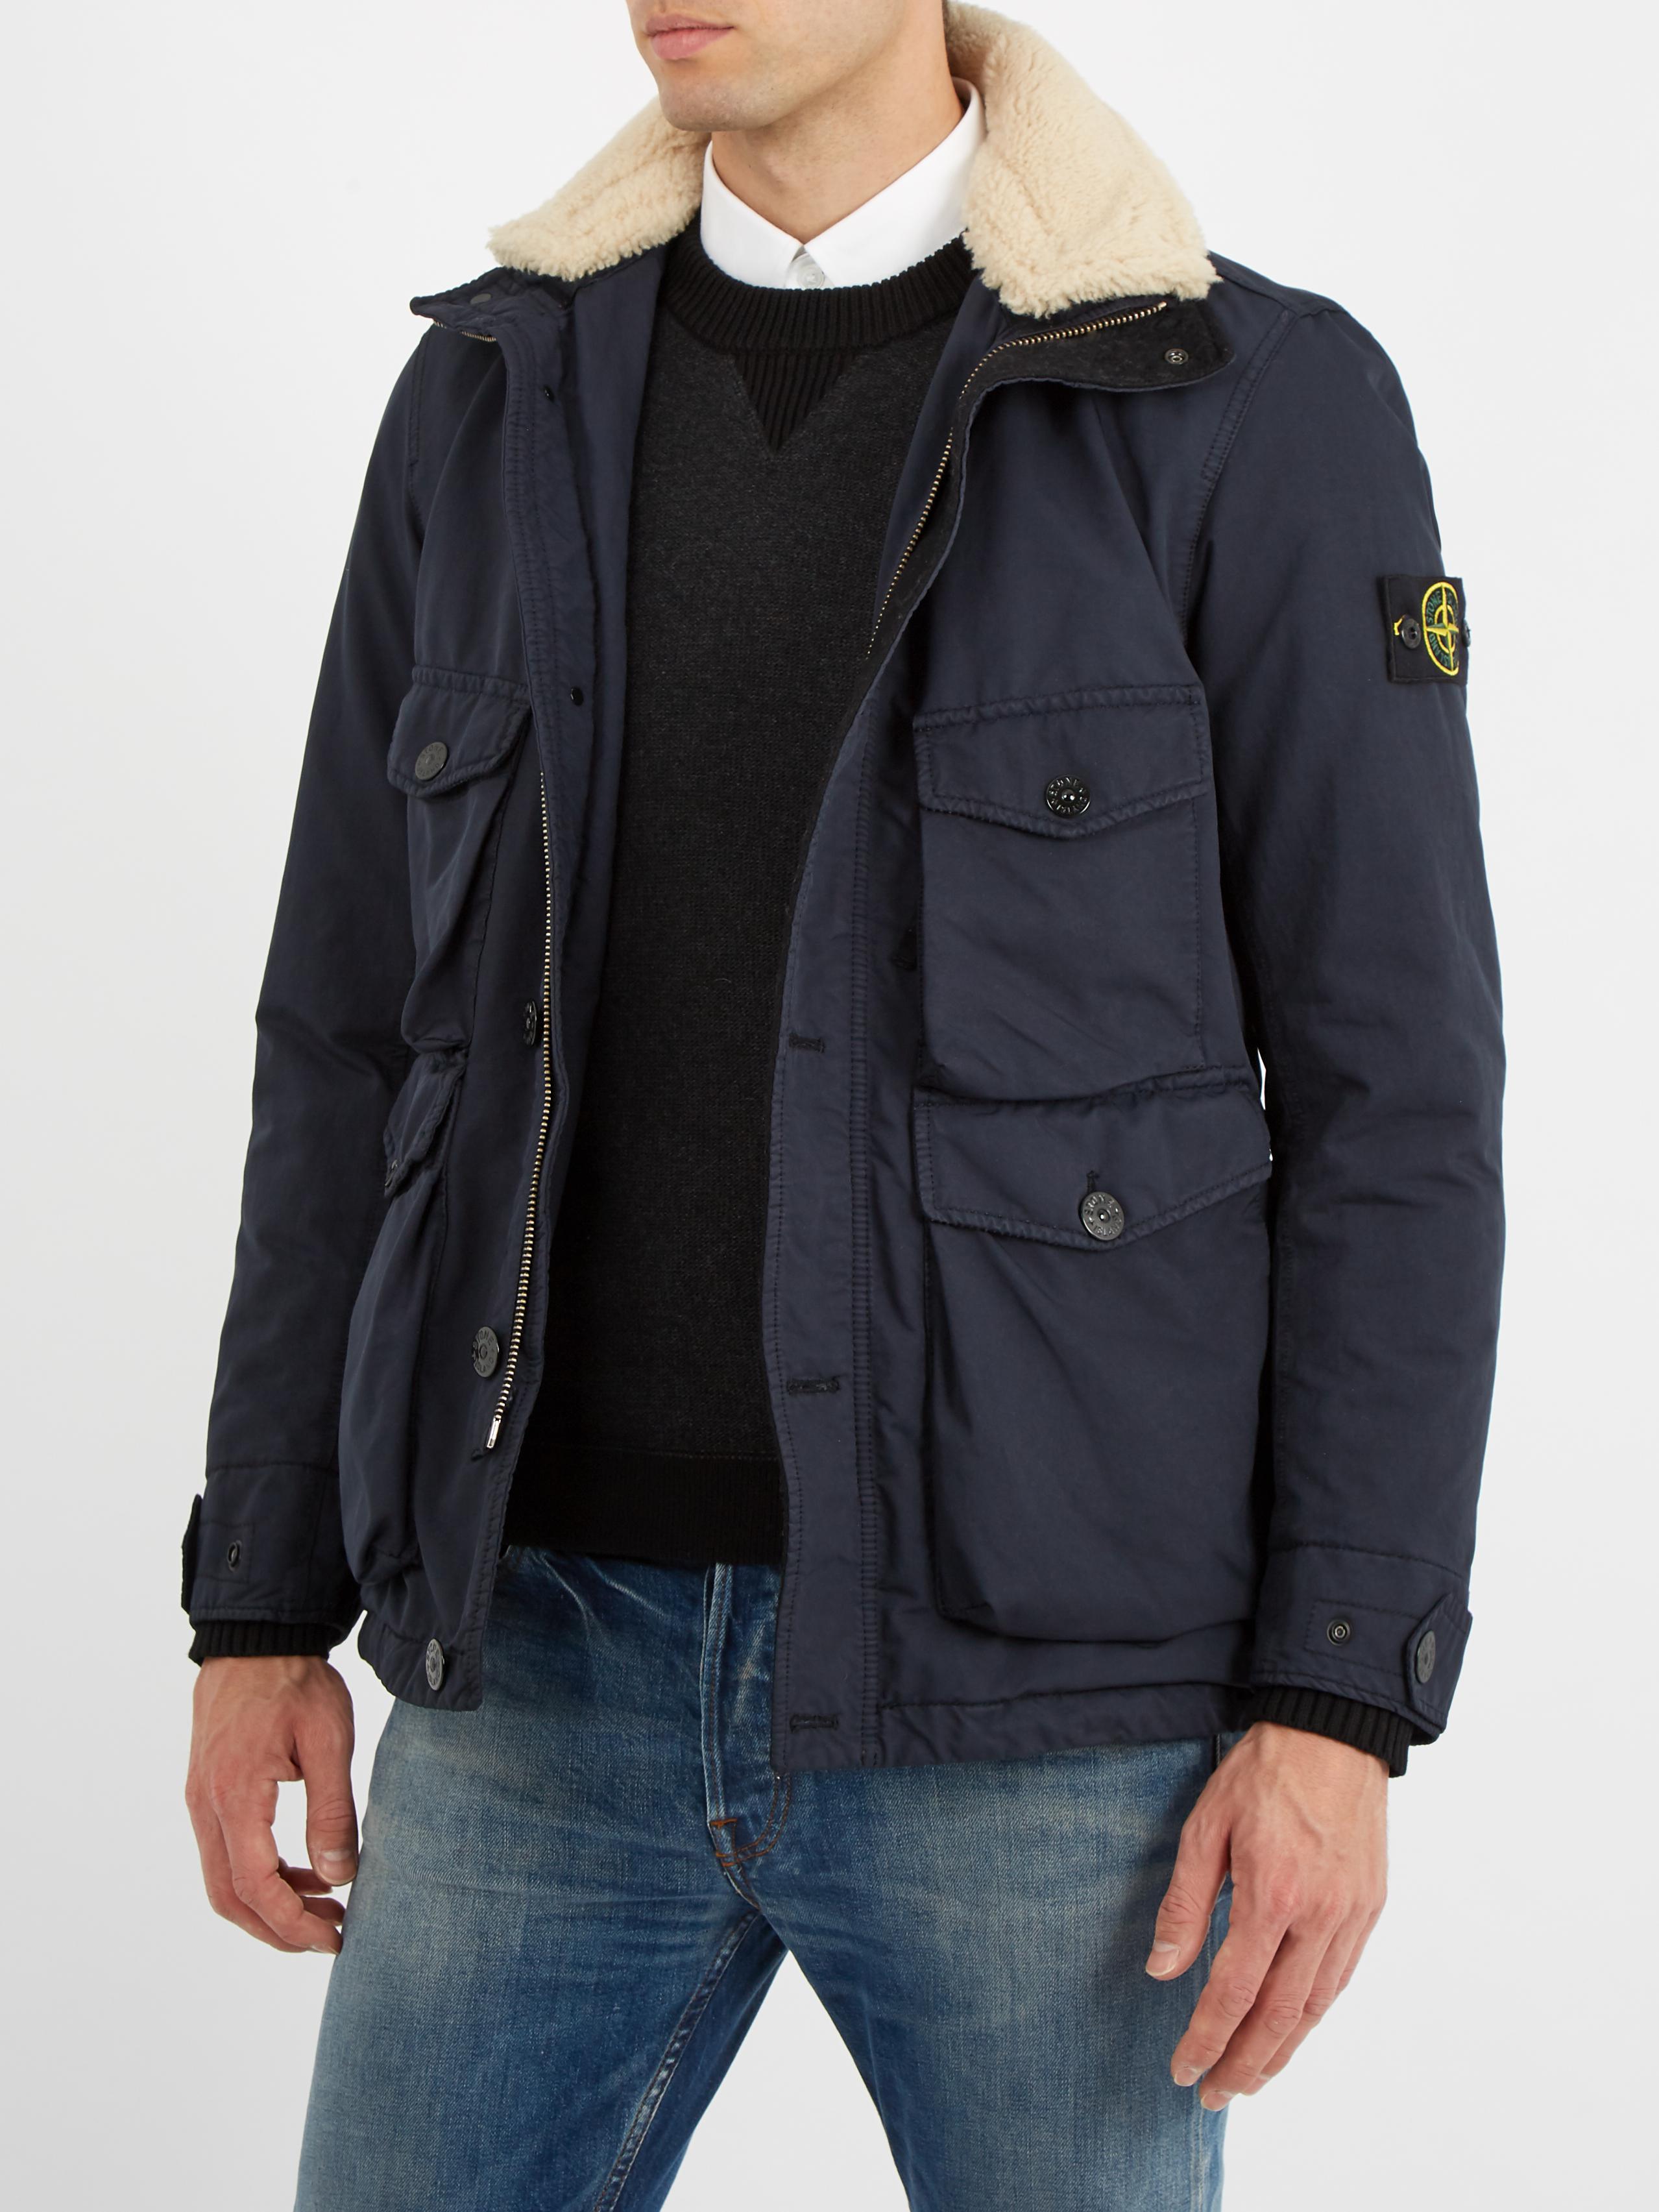 Stone Island David-tc Shearling-collar Jacket in Blue for Men | Lyst UK